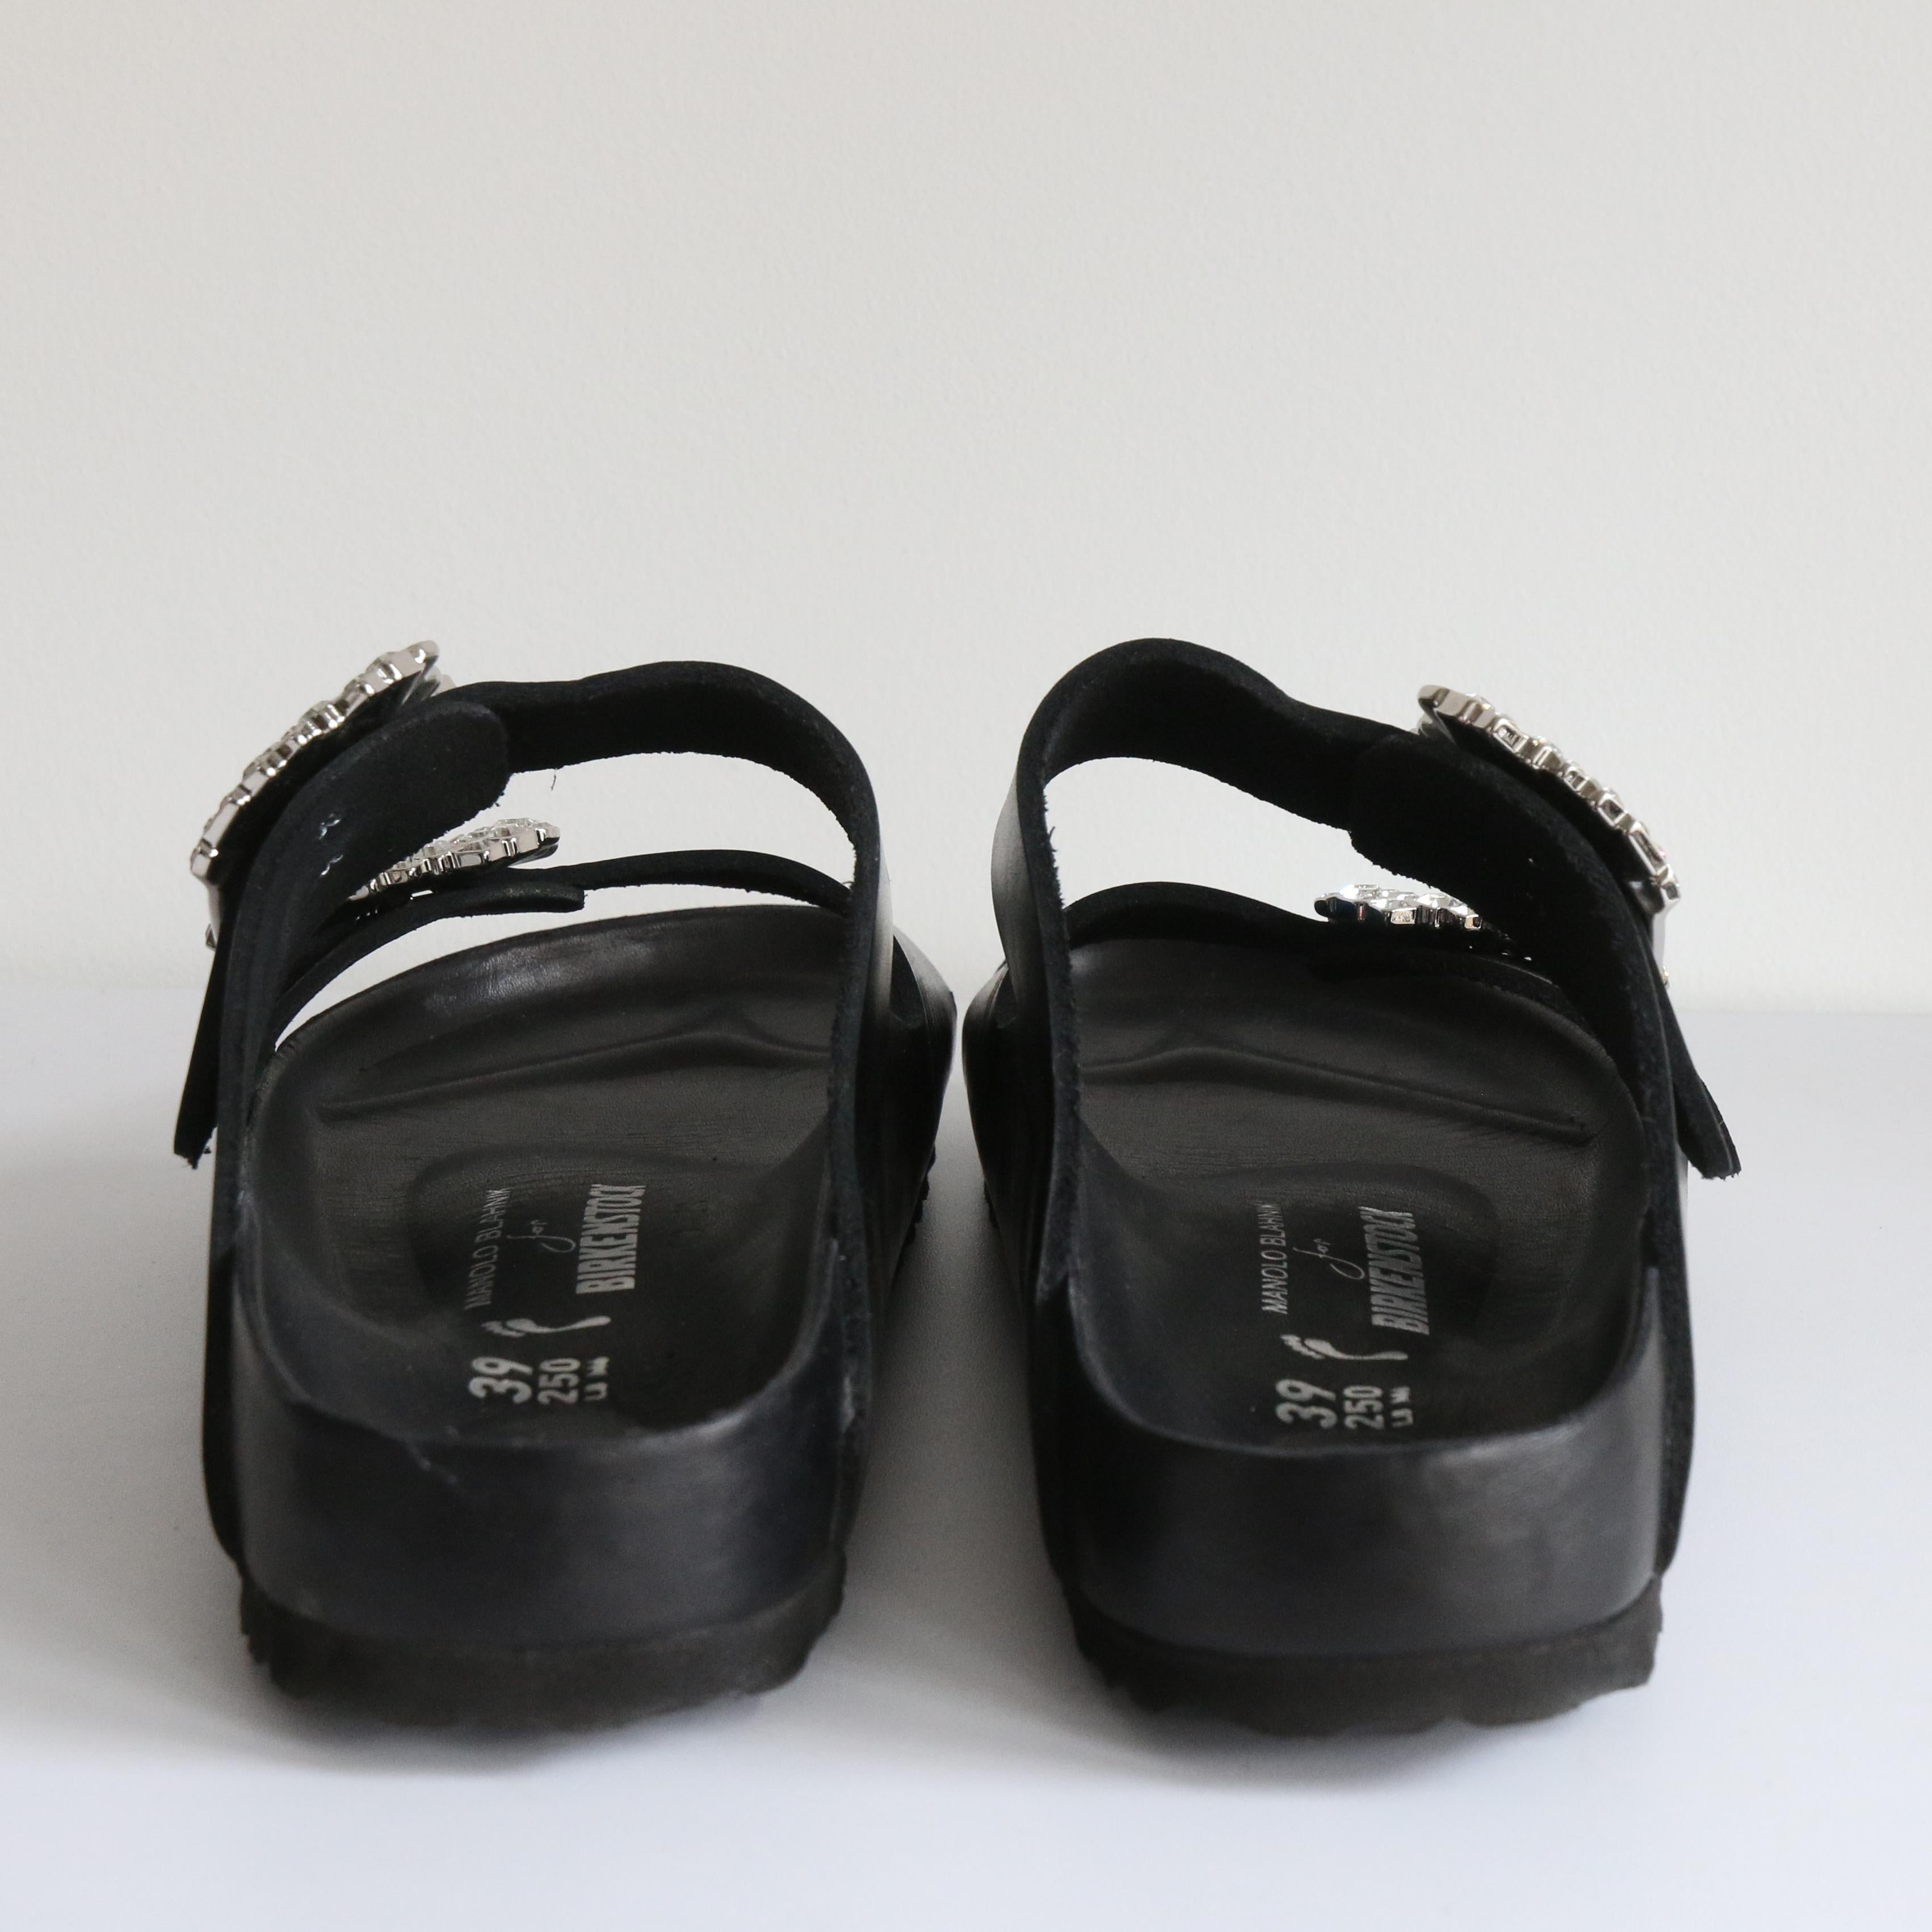  Black Leather & Rhinestone Manolo Blahnik For Birkenstock Sandals UK 6 US 8 EU  3